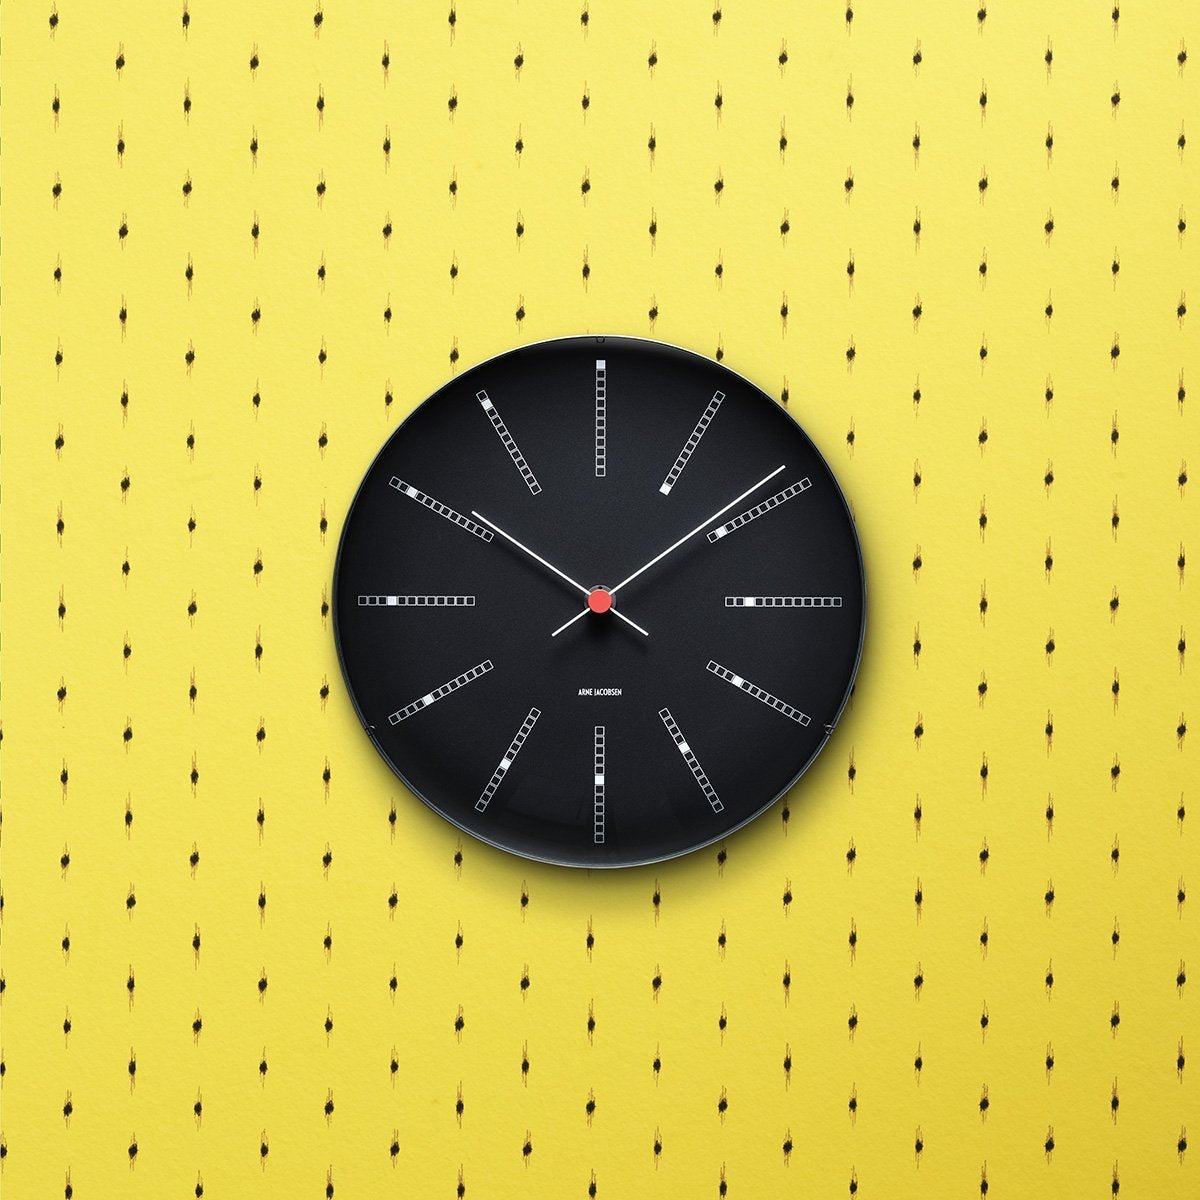 Arne Jacobsen Reloj de pared Negro, 29 cm